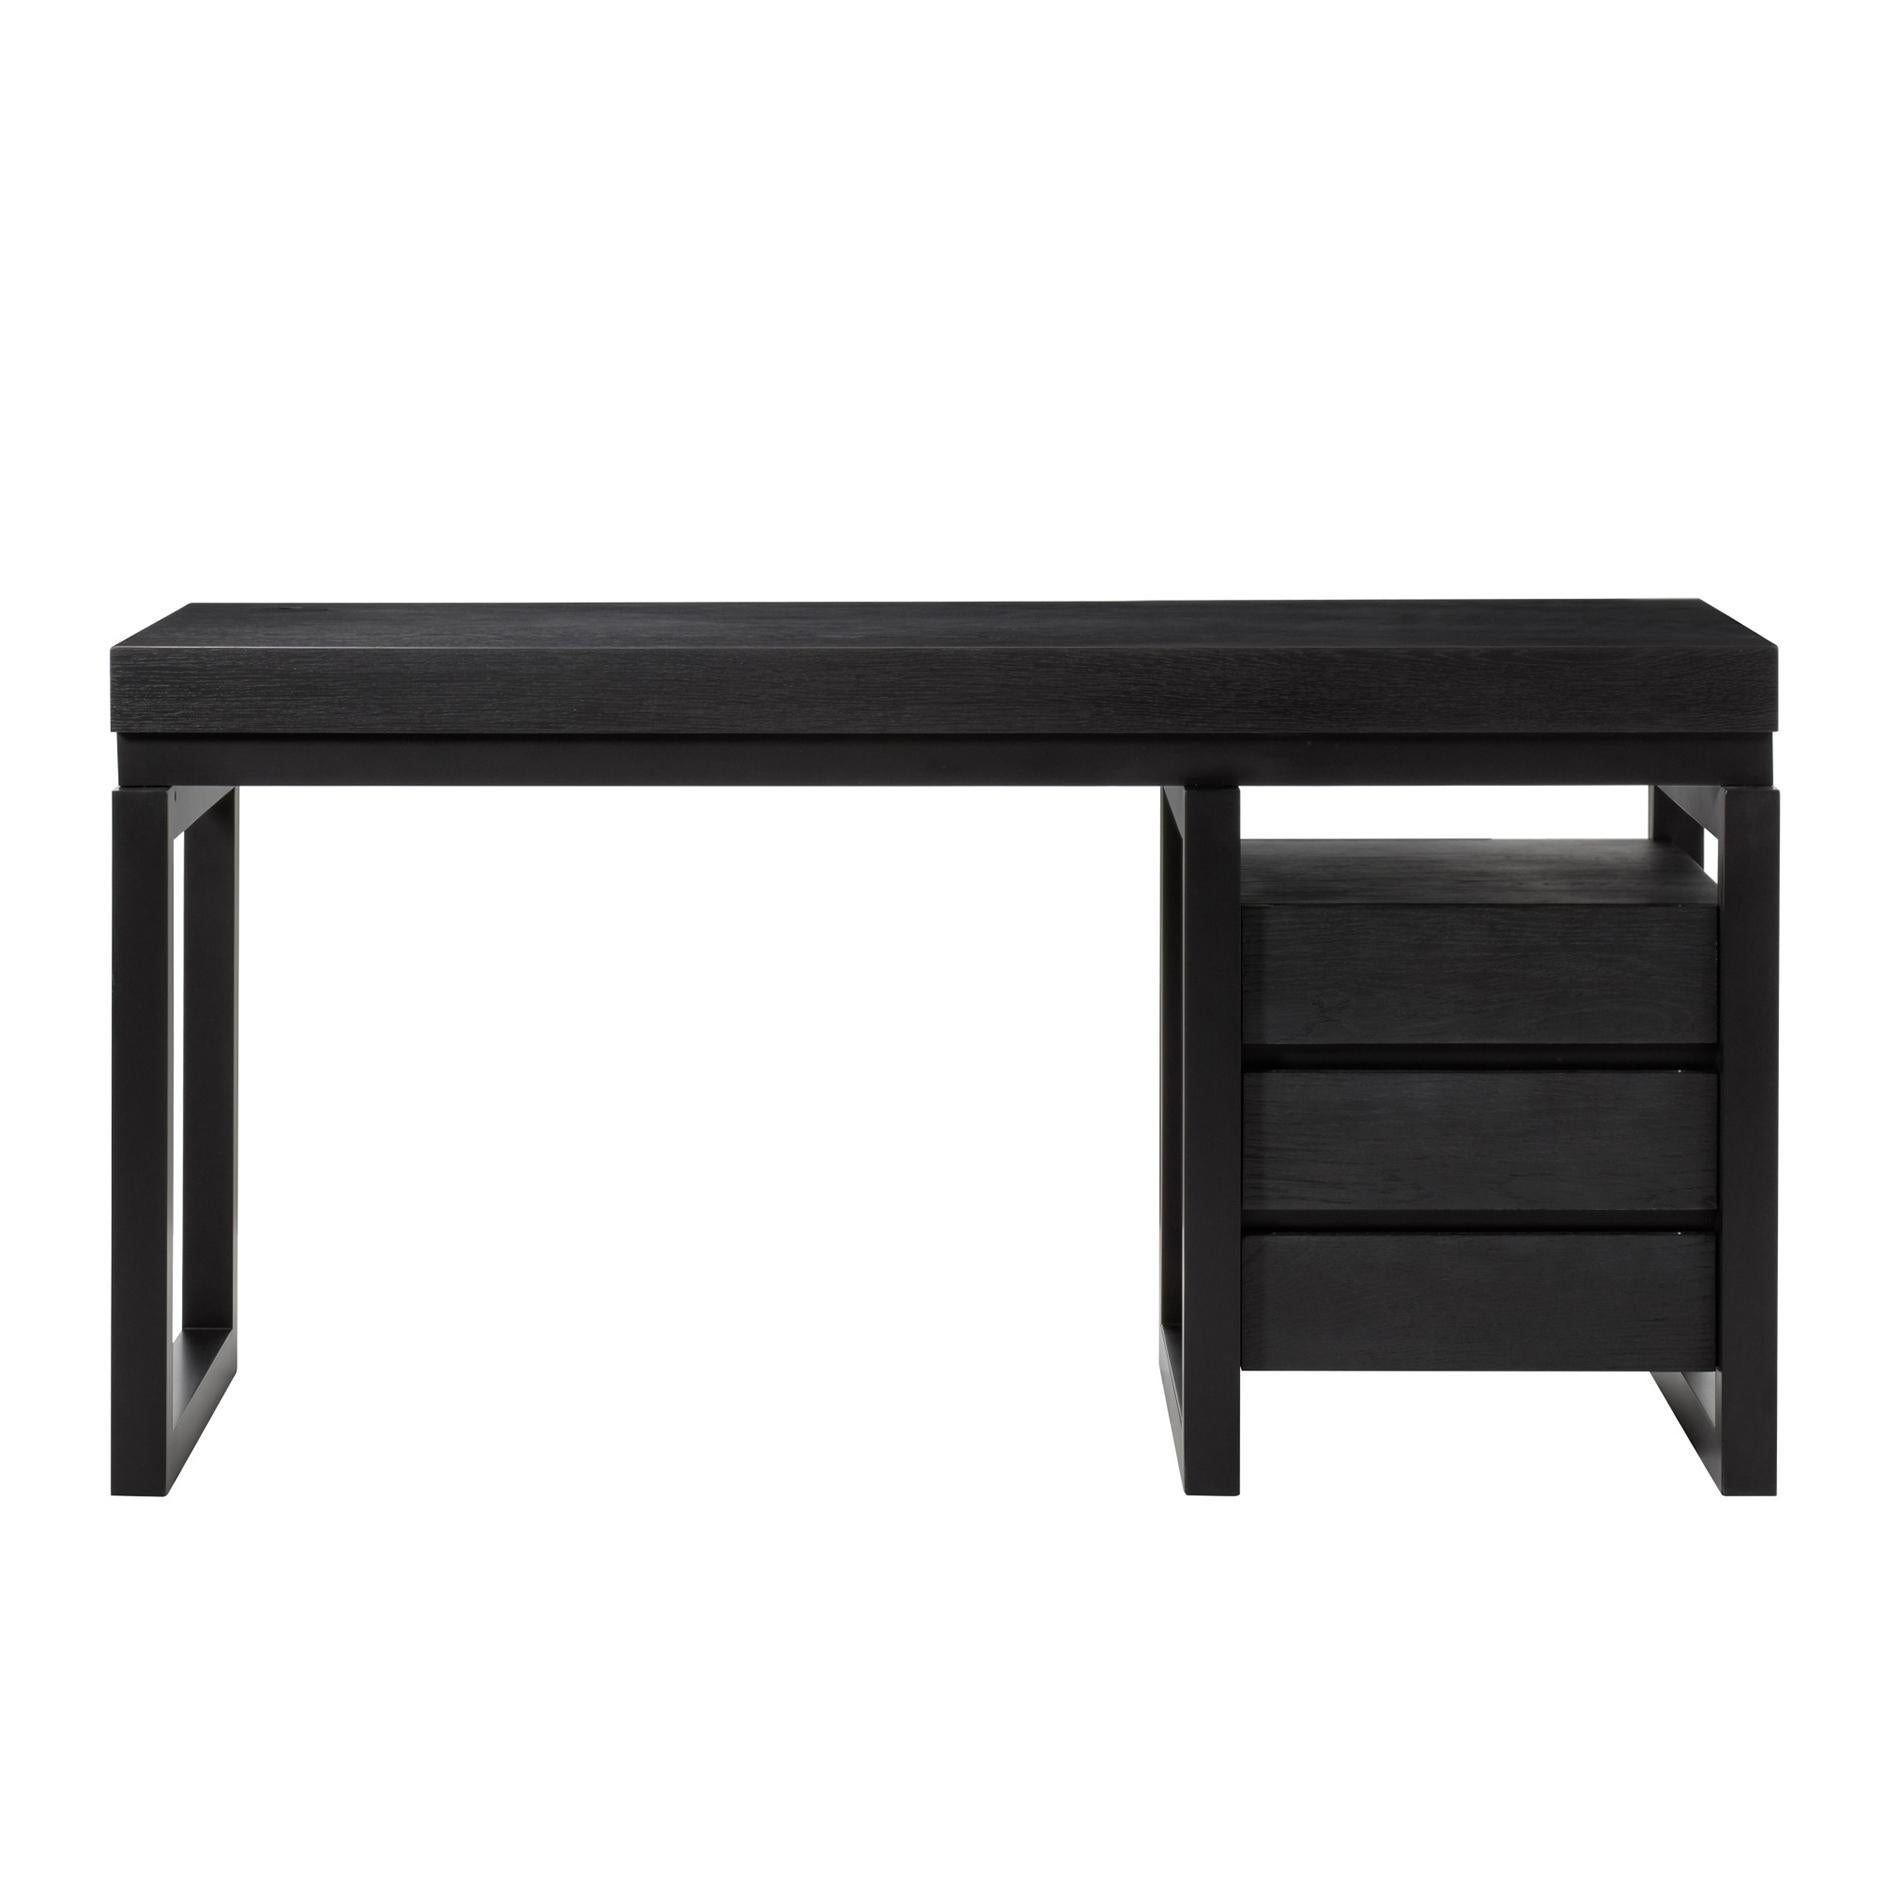 Desk black oak made with hardwood in black
oak graphite finish. Structure in steel in black
matte finish. Desk with 3 drawers.